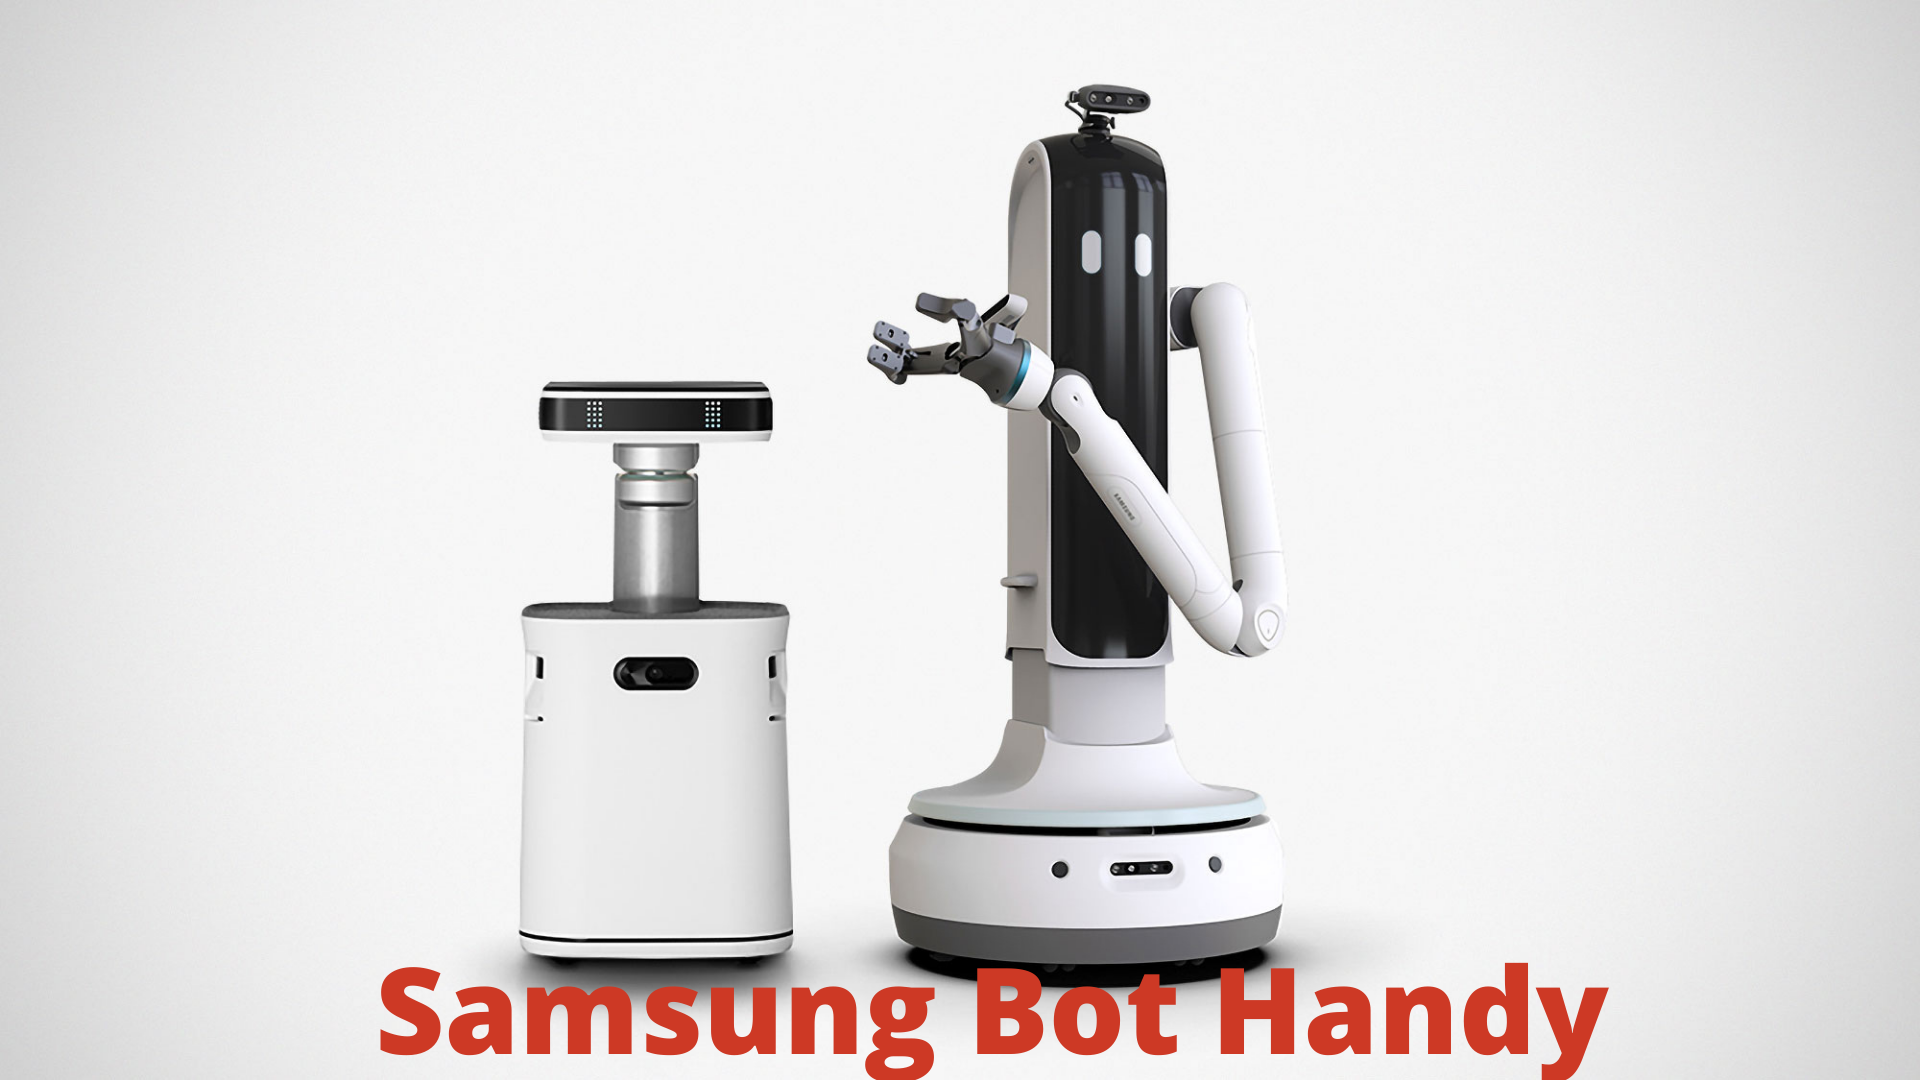 Samsung Bot Handy